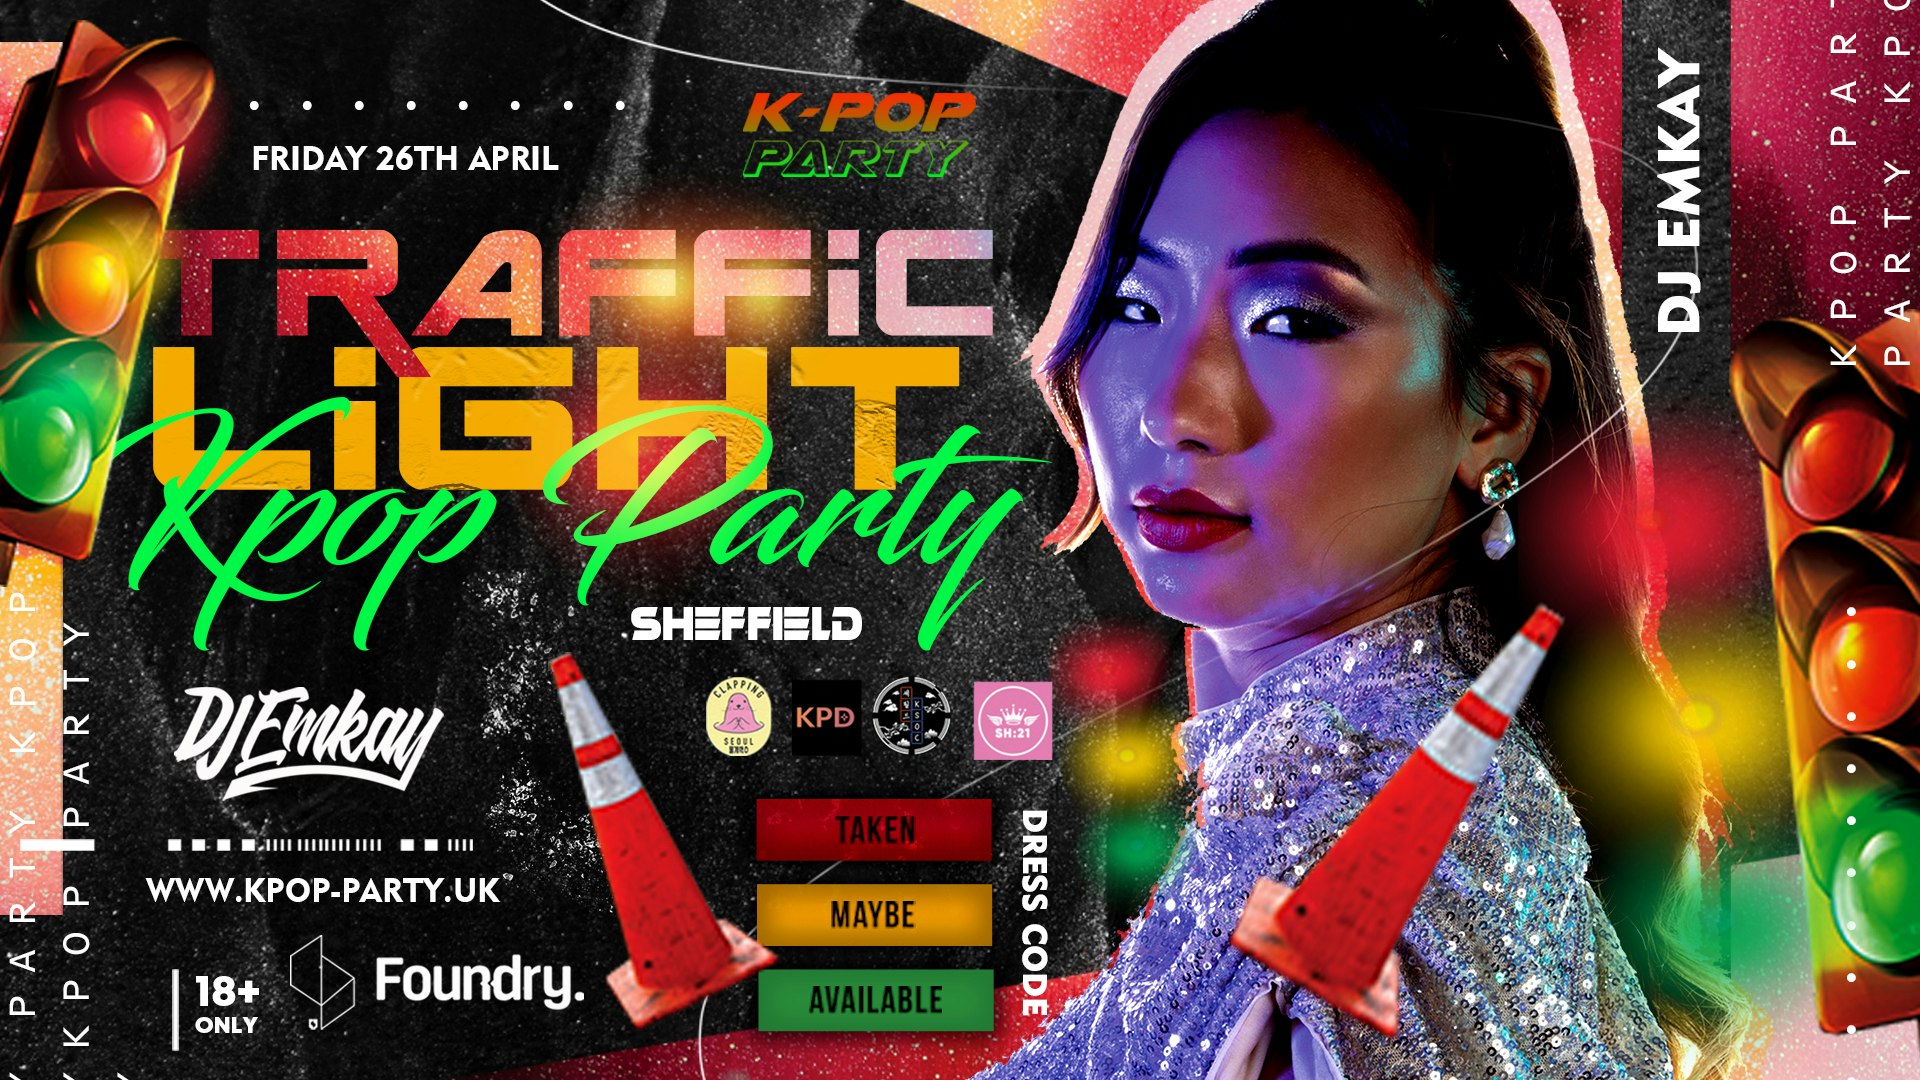 K-Pop TRAFFIC LIGHT Party Sheffield with DJ EMKAY | Friday 26th April